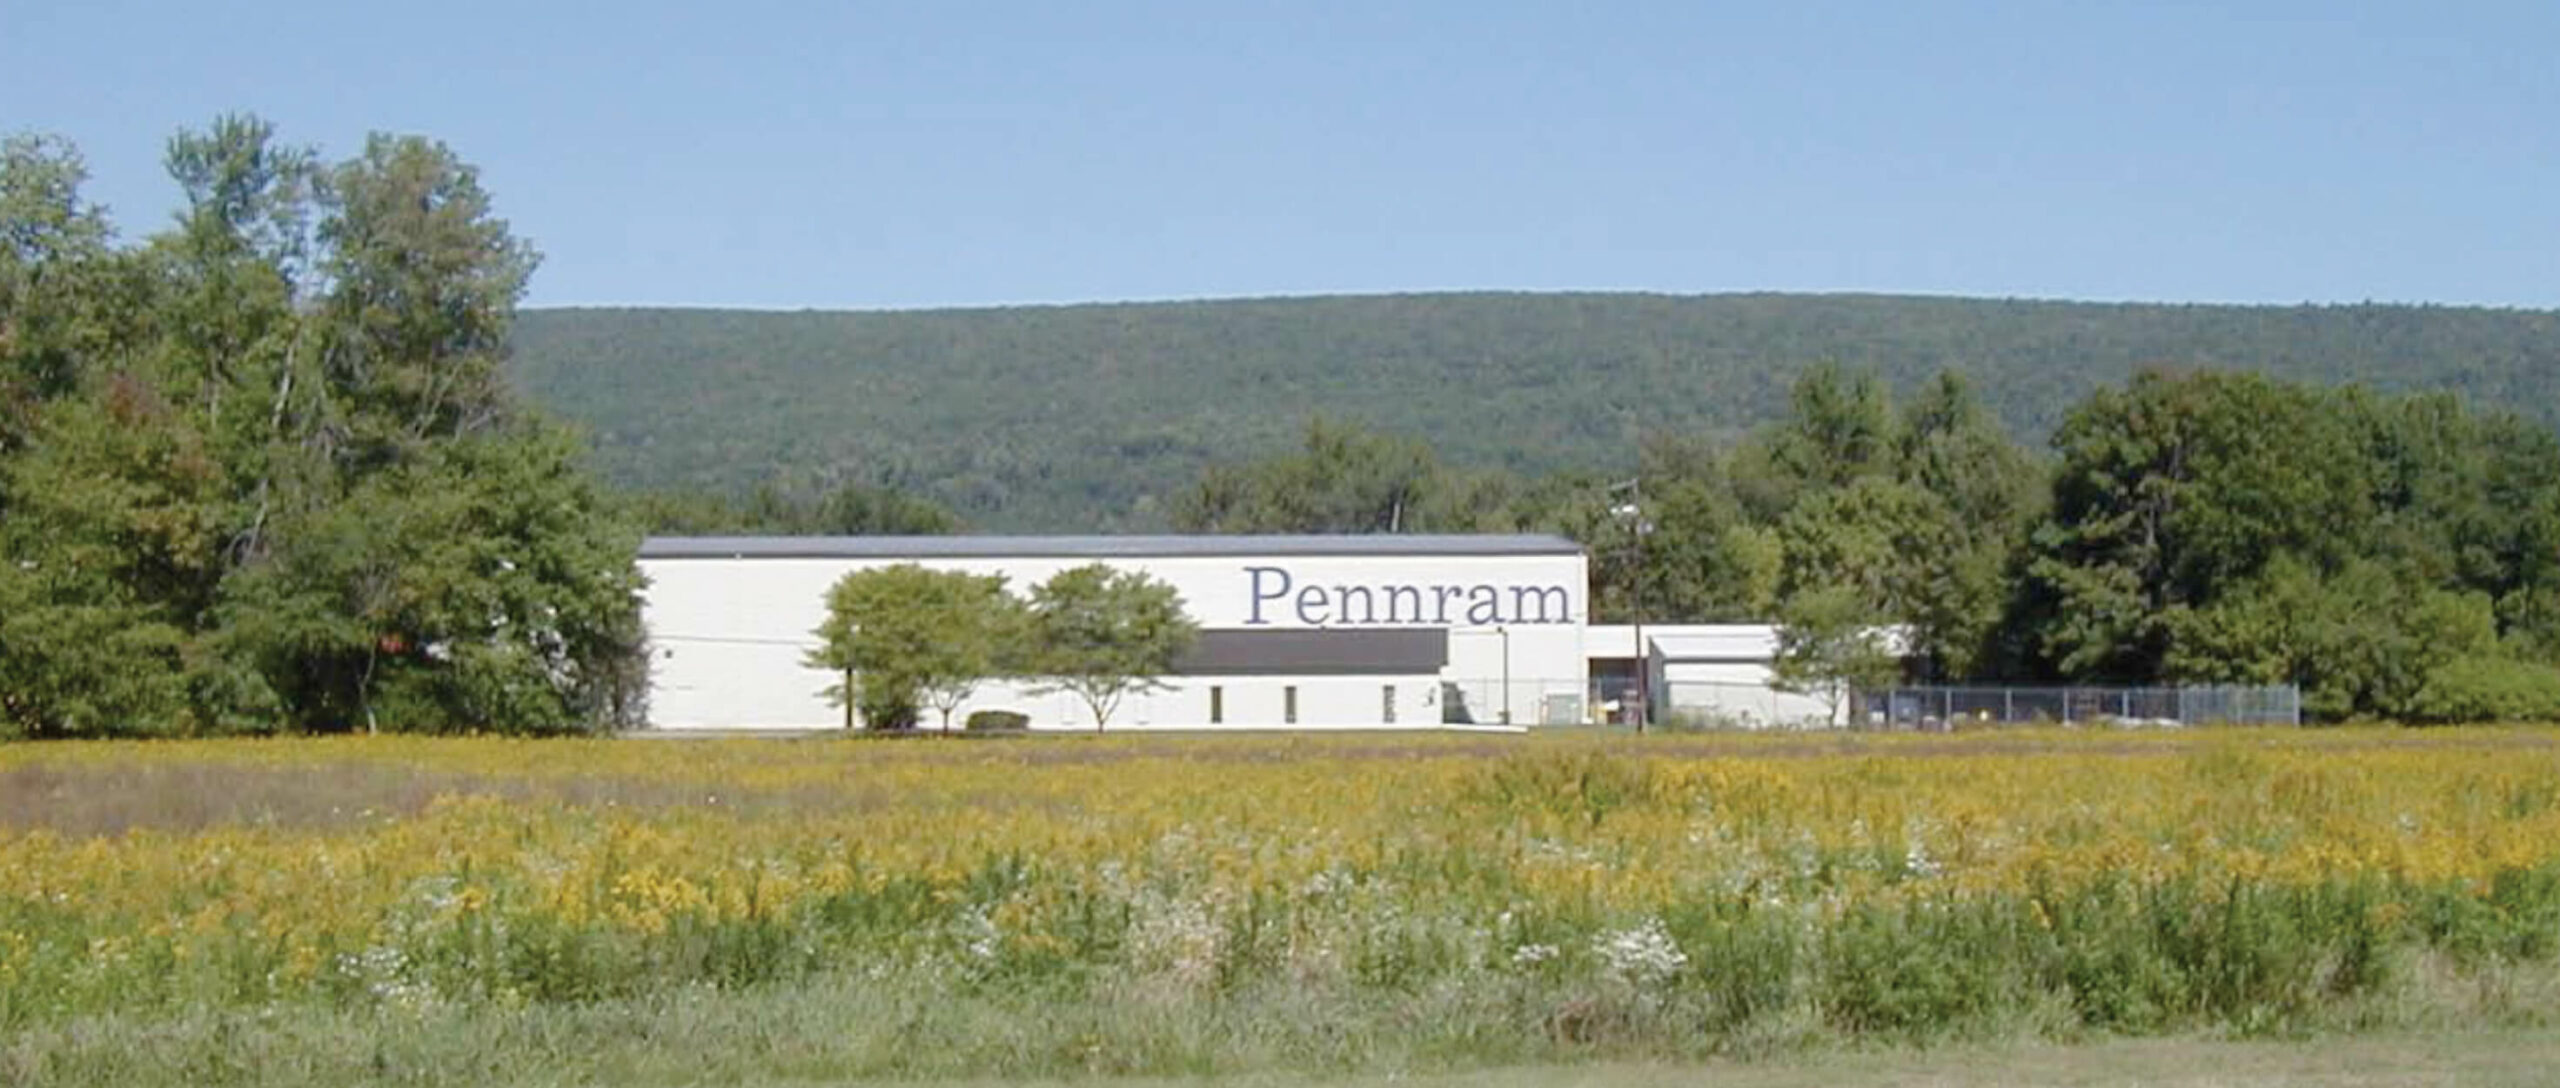 Pennram Building